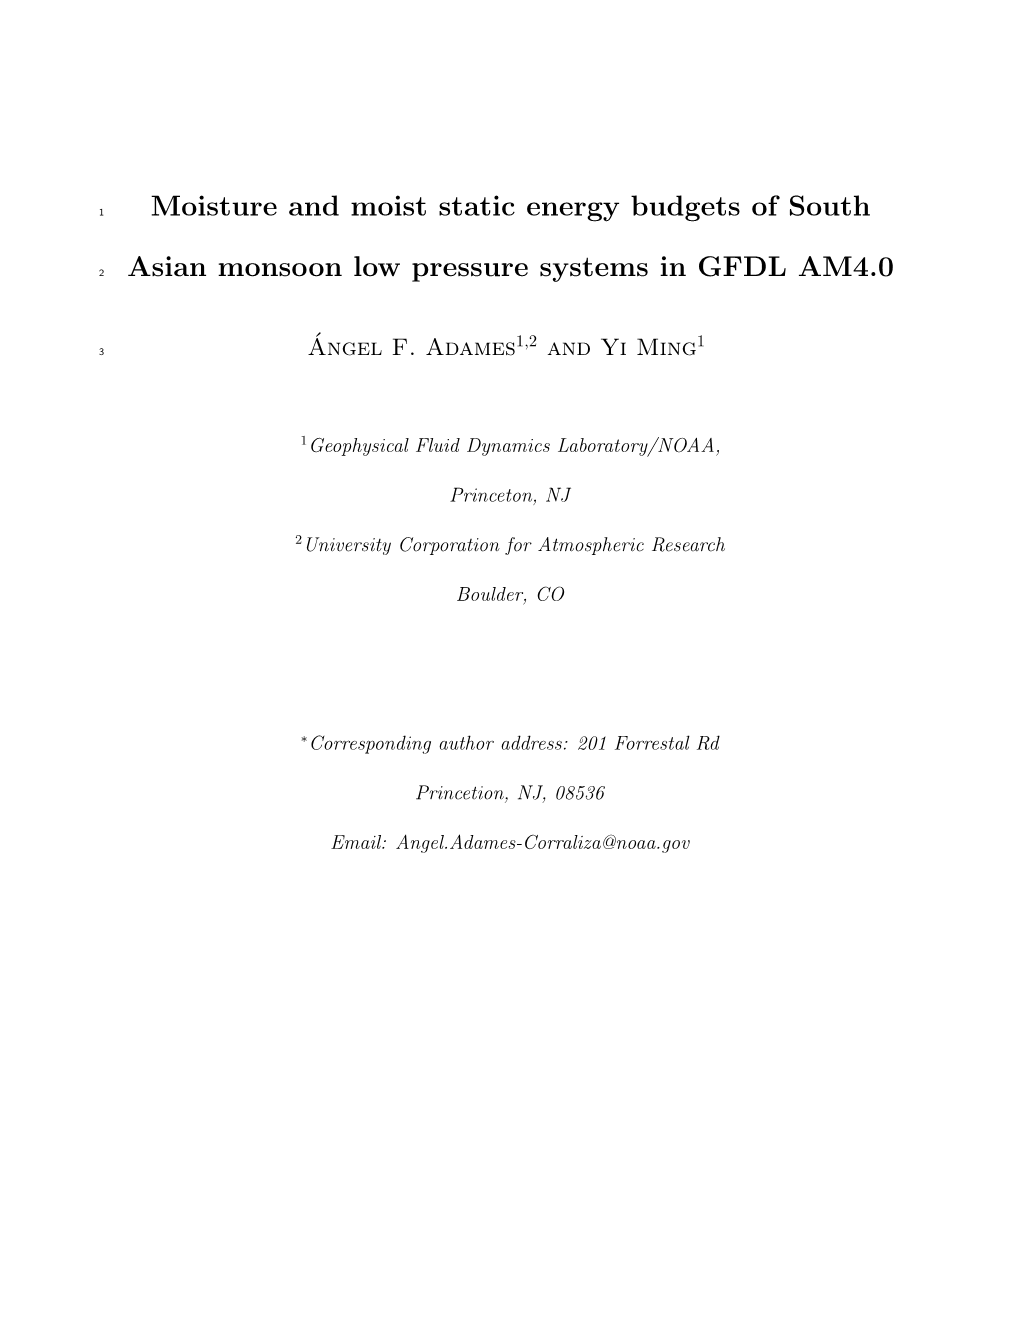 Moist and Moist Static Energy Budgets